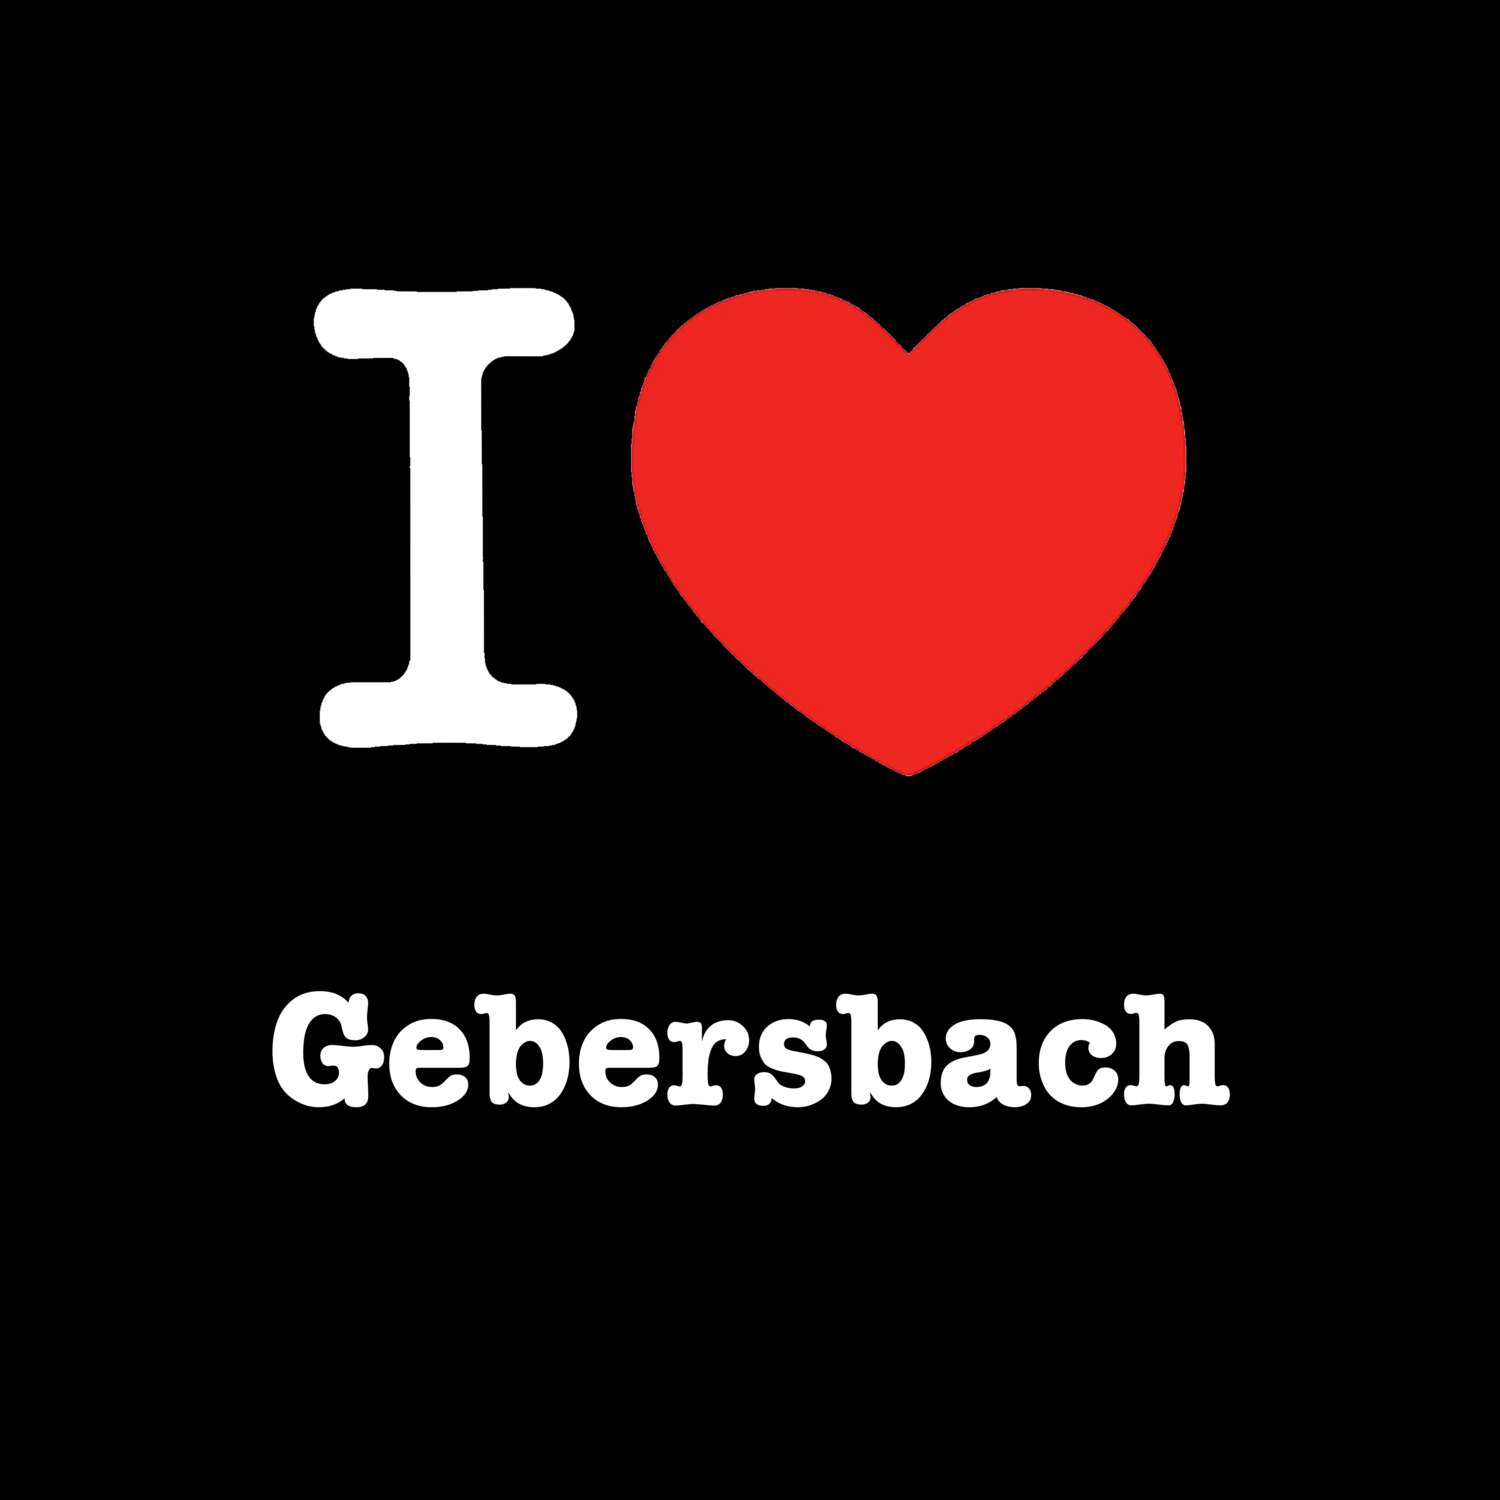 Gebersbach T-Shirt »I love«